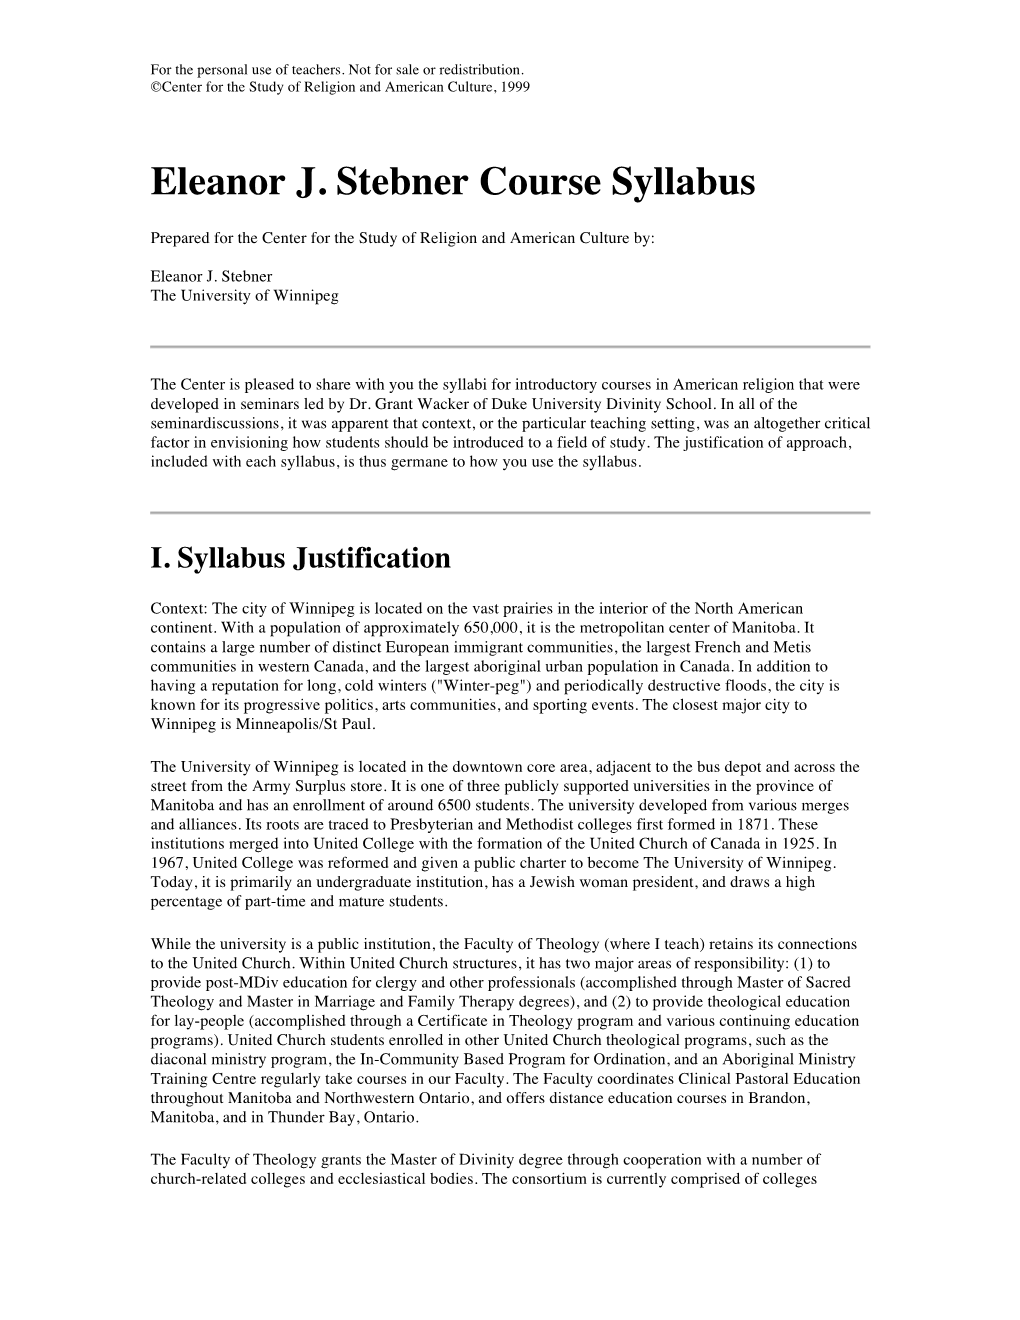 Eleanor J. Stebner Course Syllabus